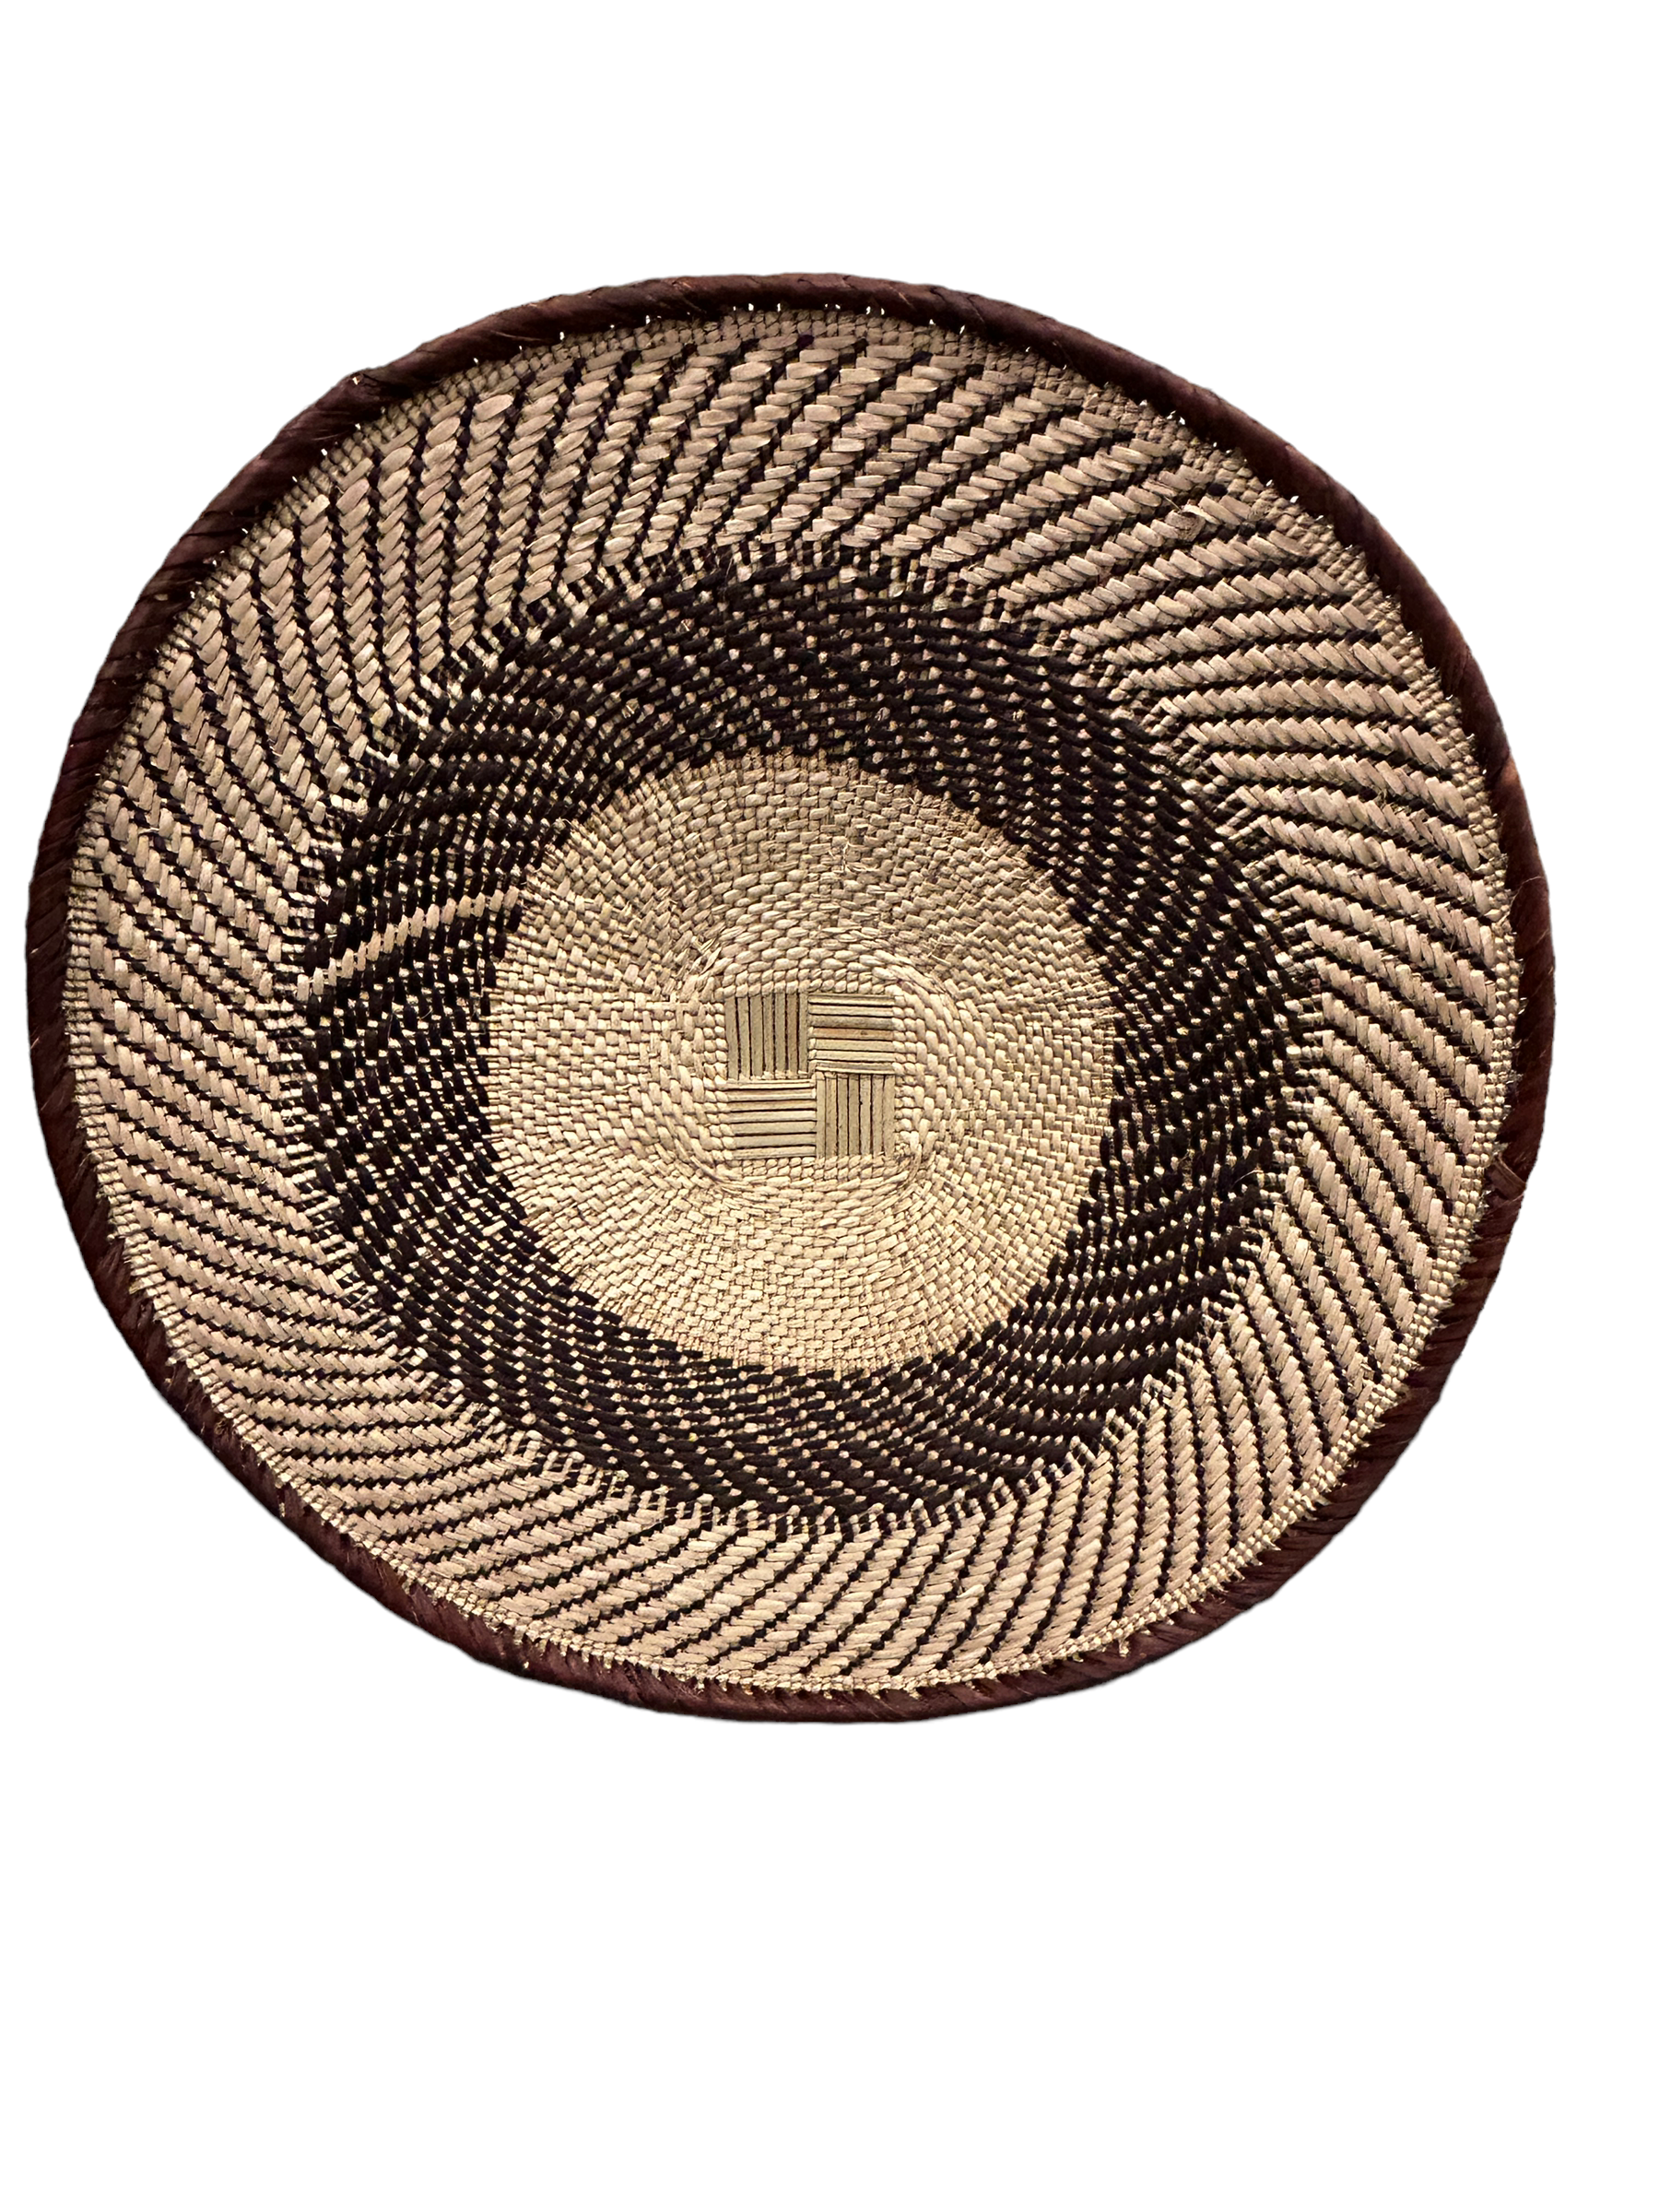 Tonga Basket Natural (45-06)